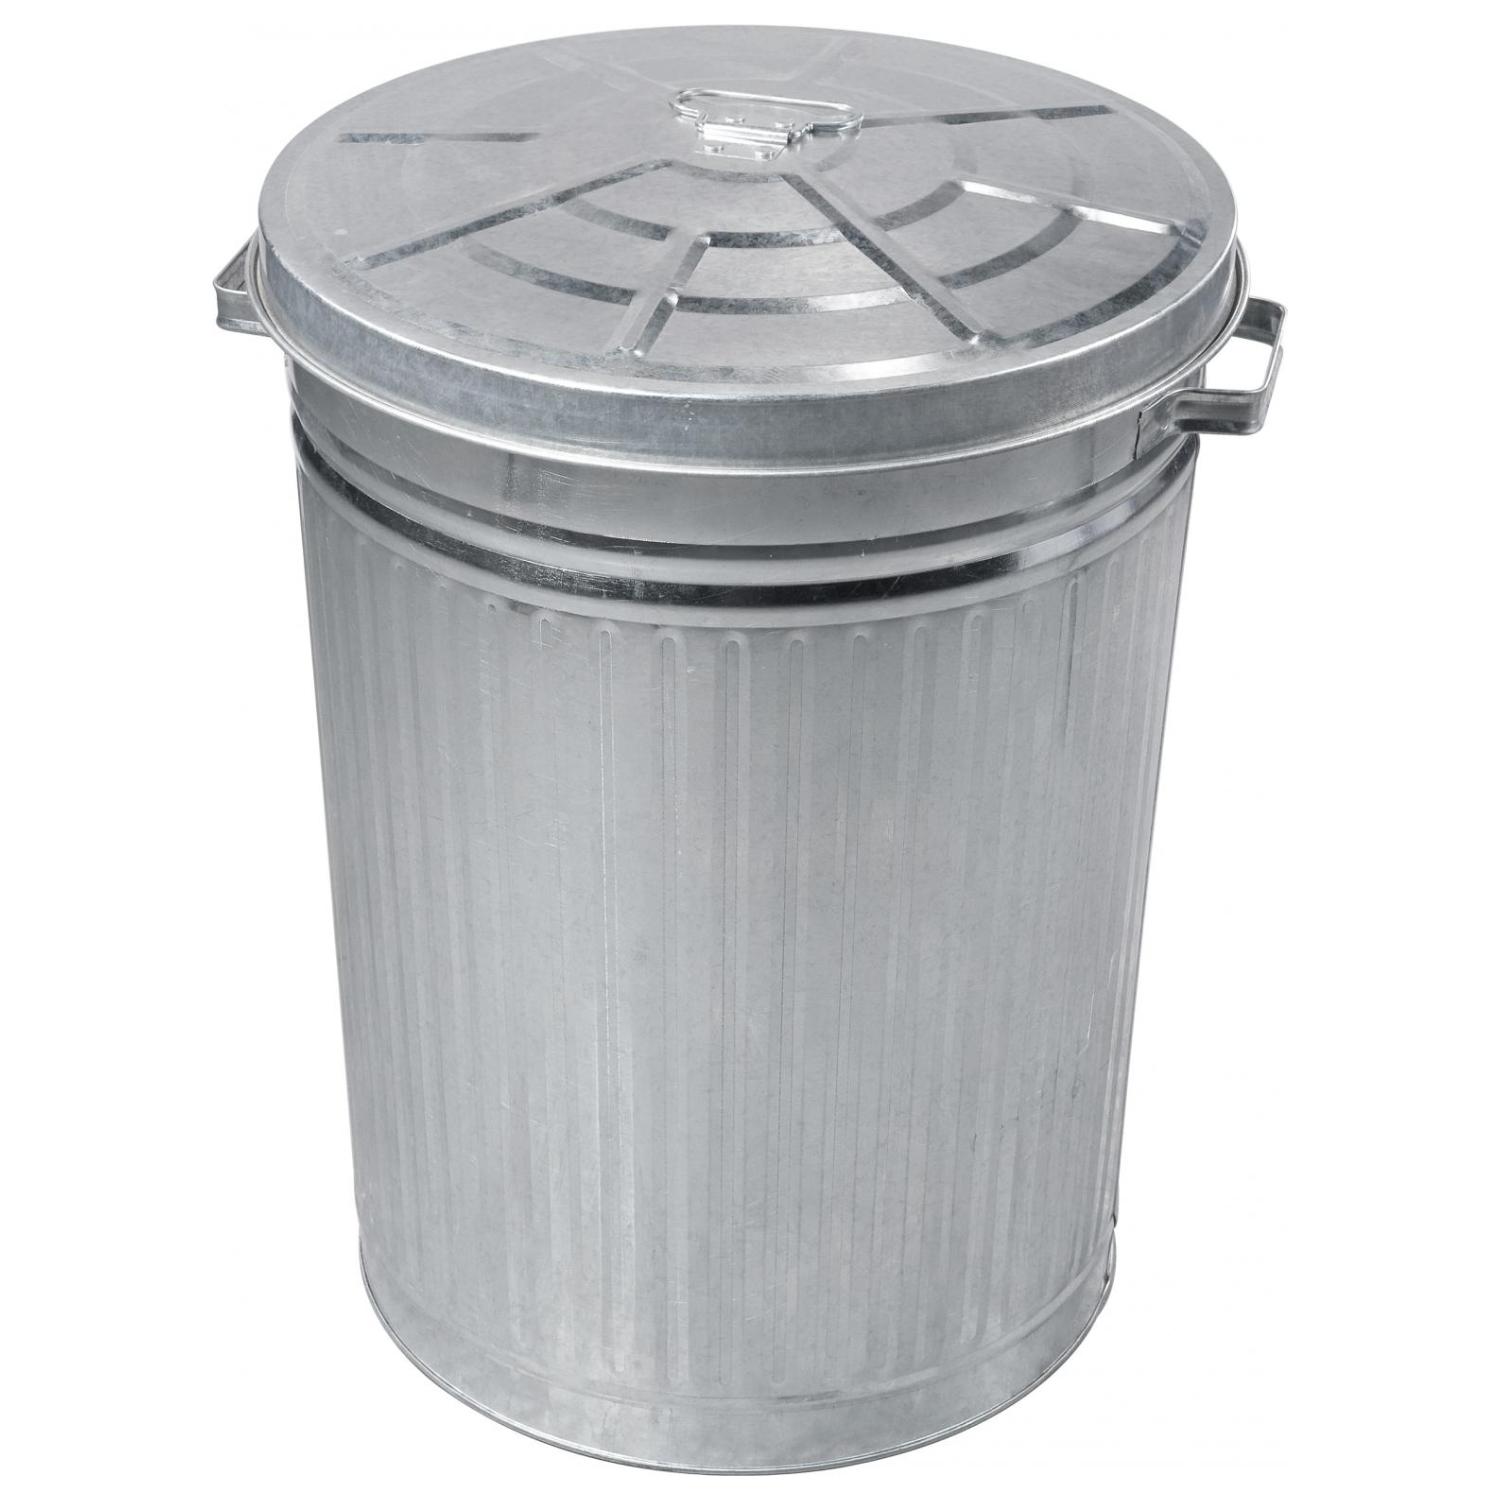 Abfallbehälter aus Metall - 75 Liter